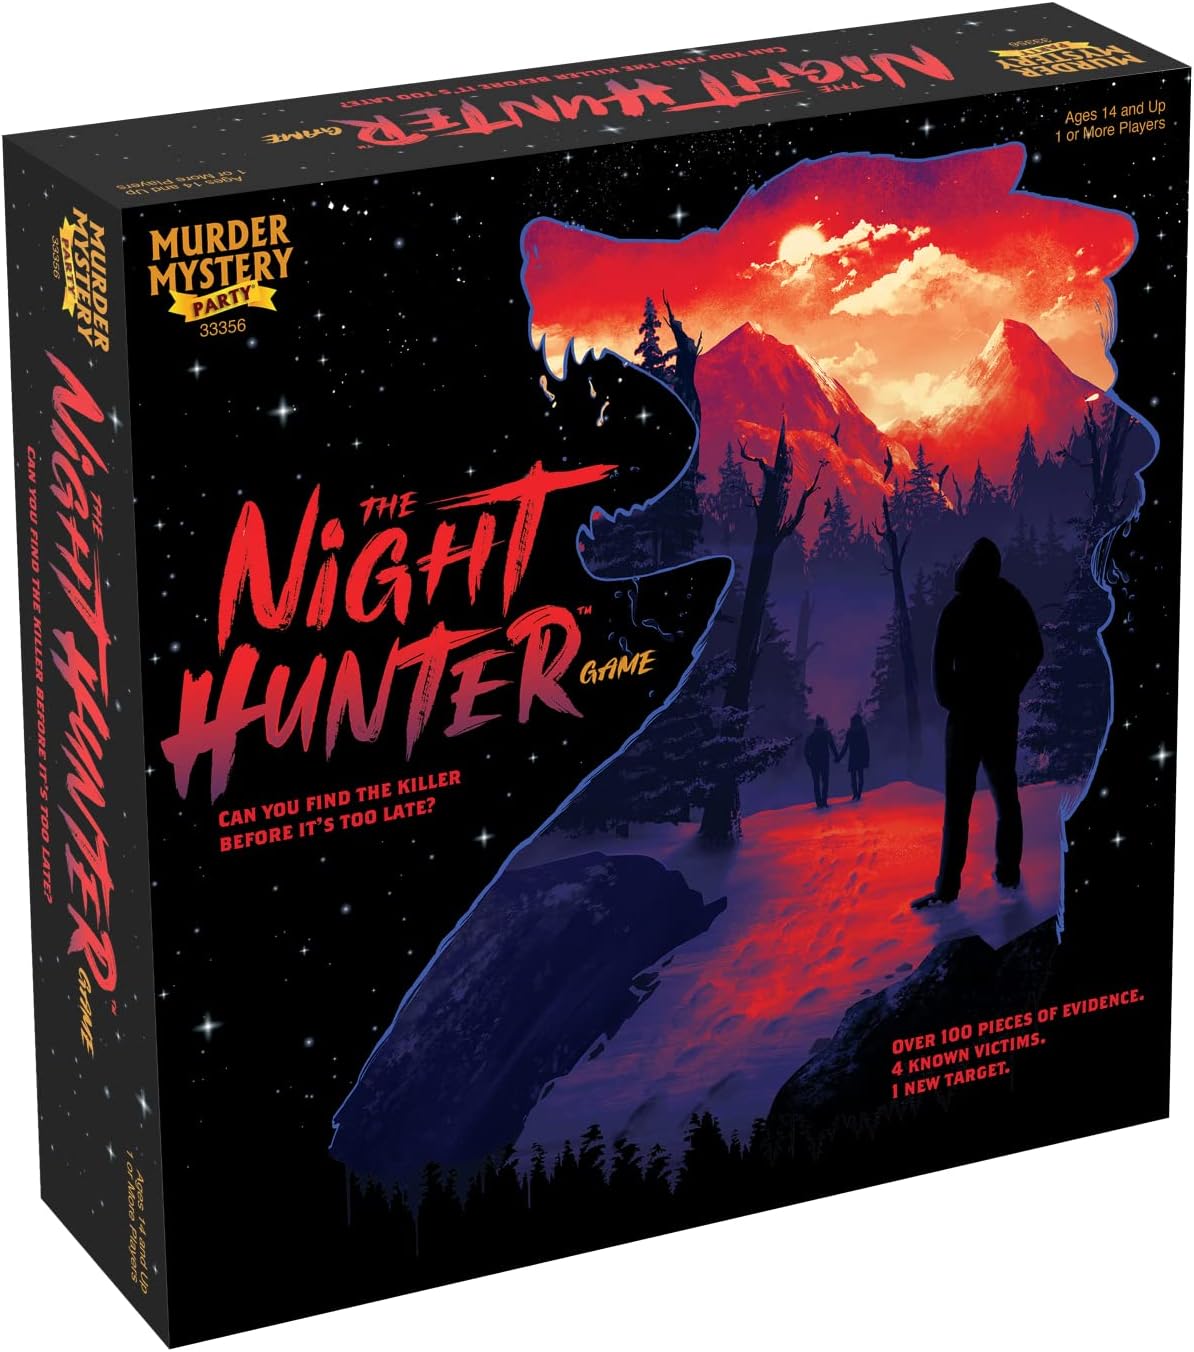 The Night Hunter Game